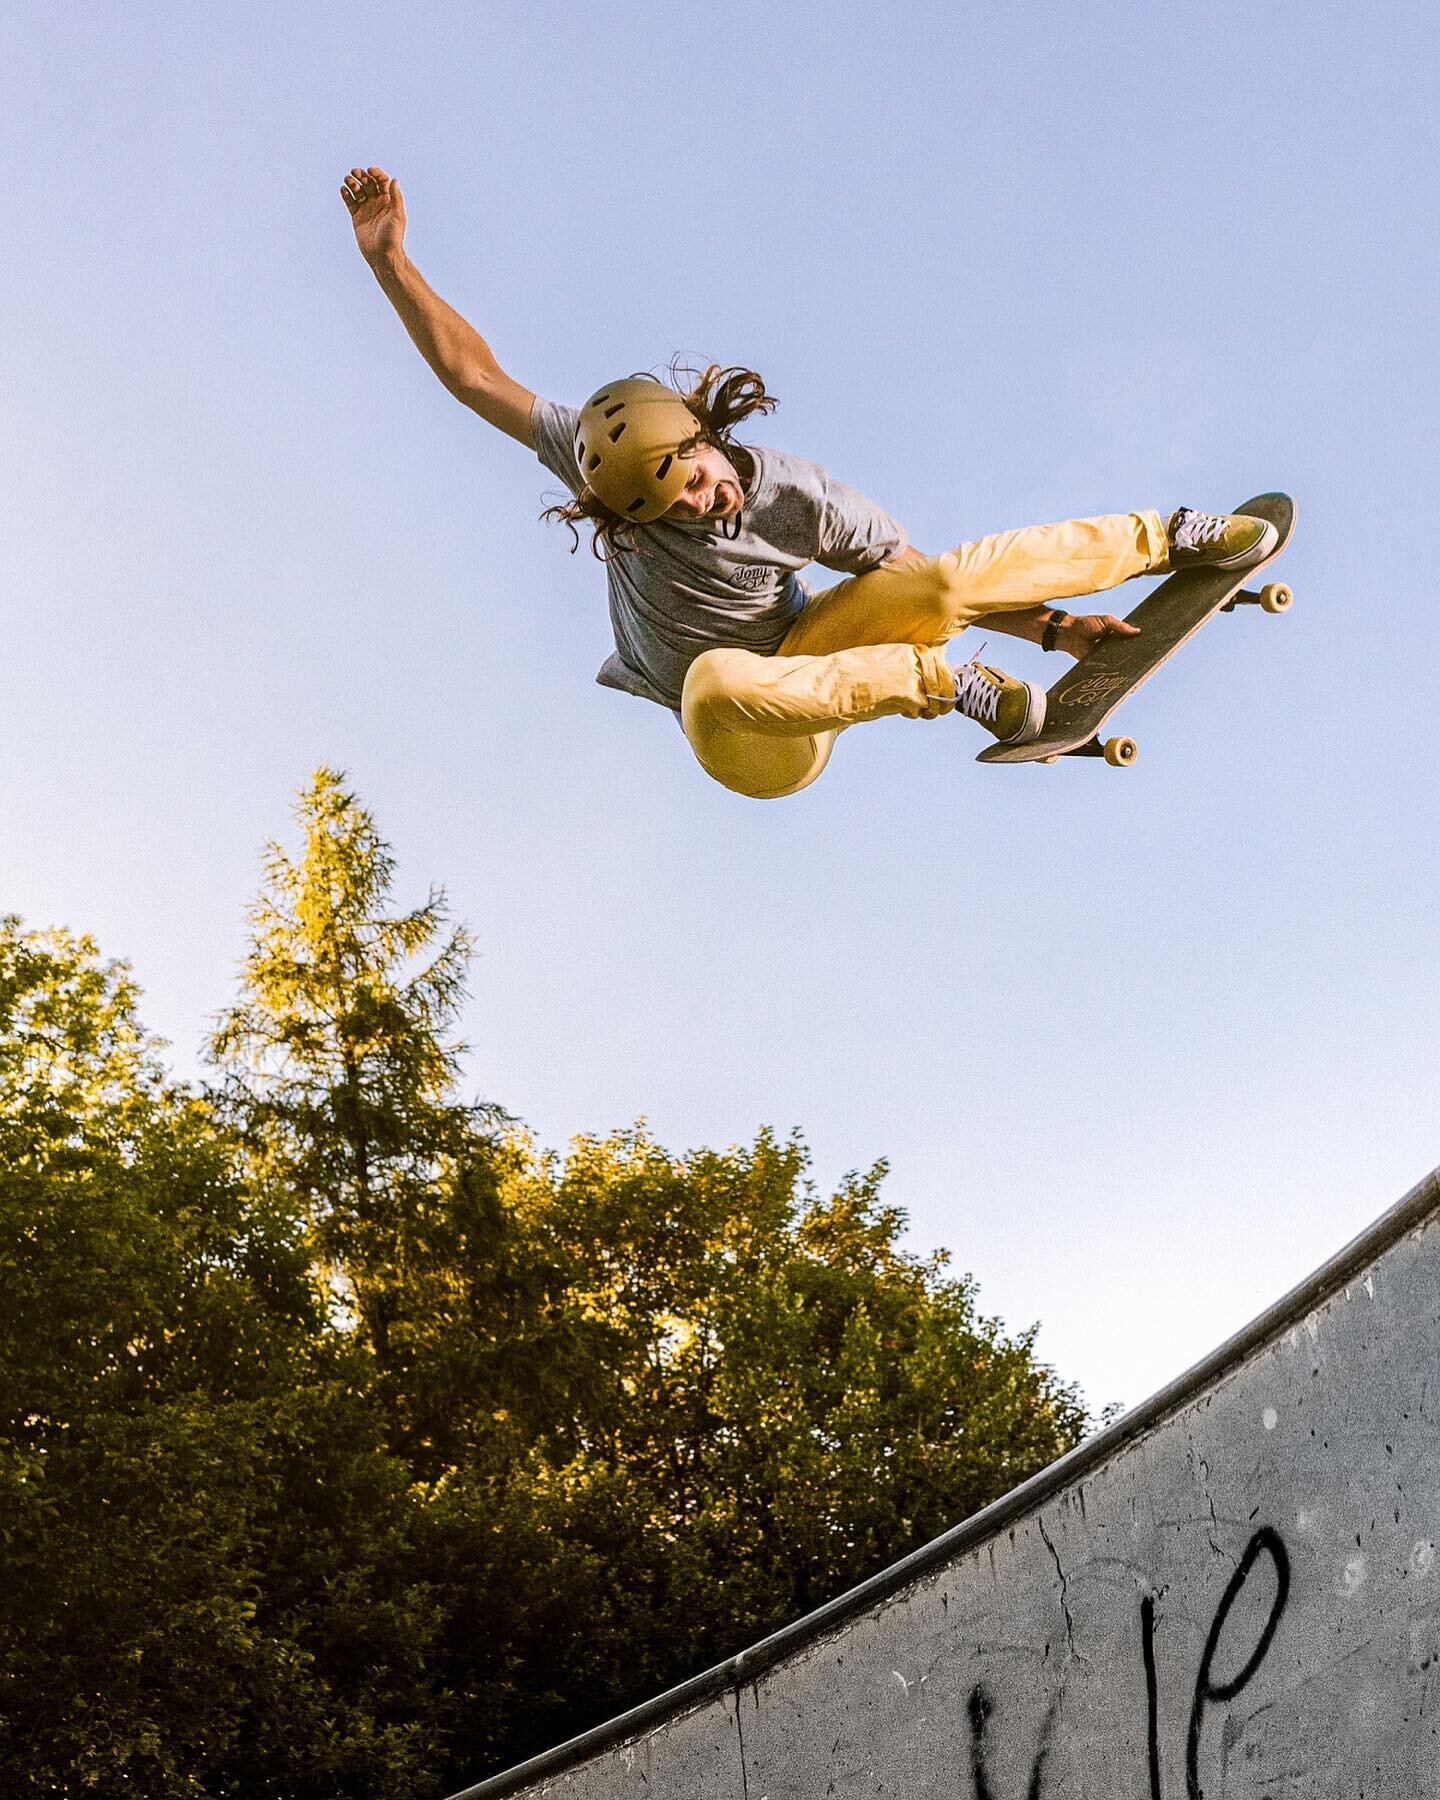 Melon Grab #Skateboarding 
📷por @graeme.fordham